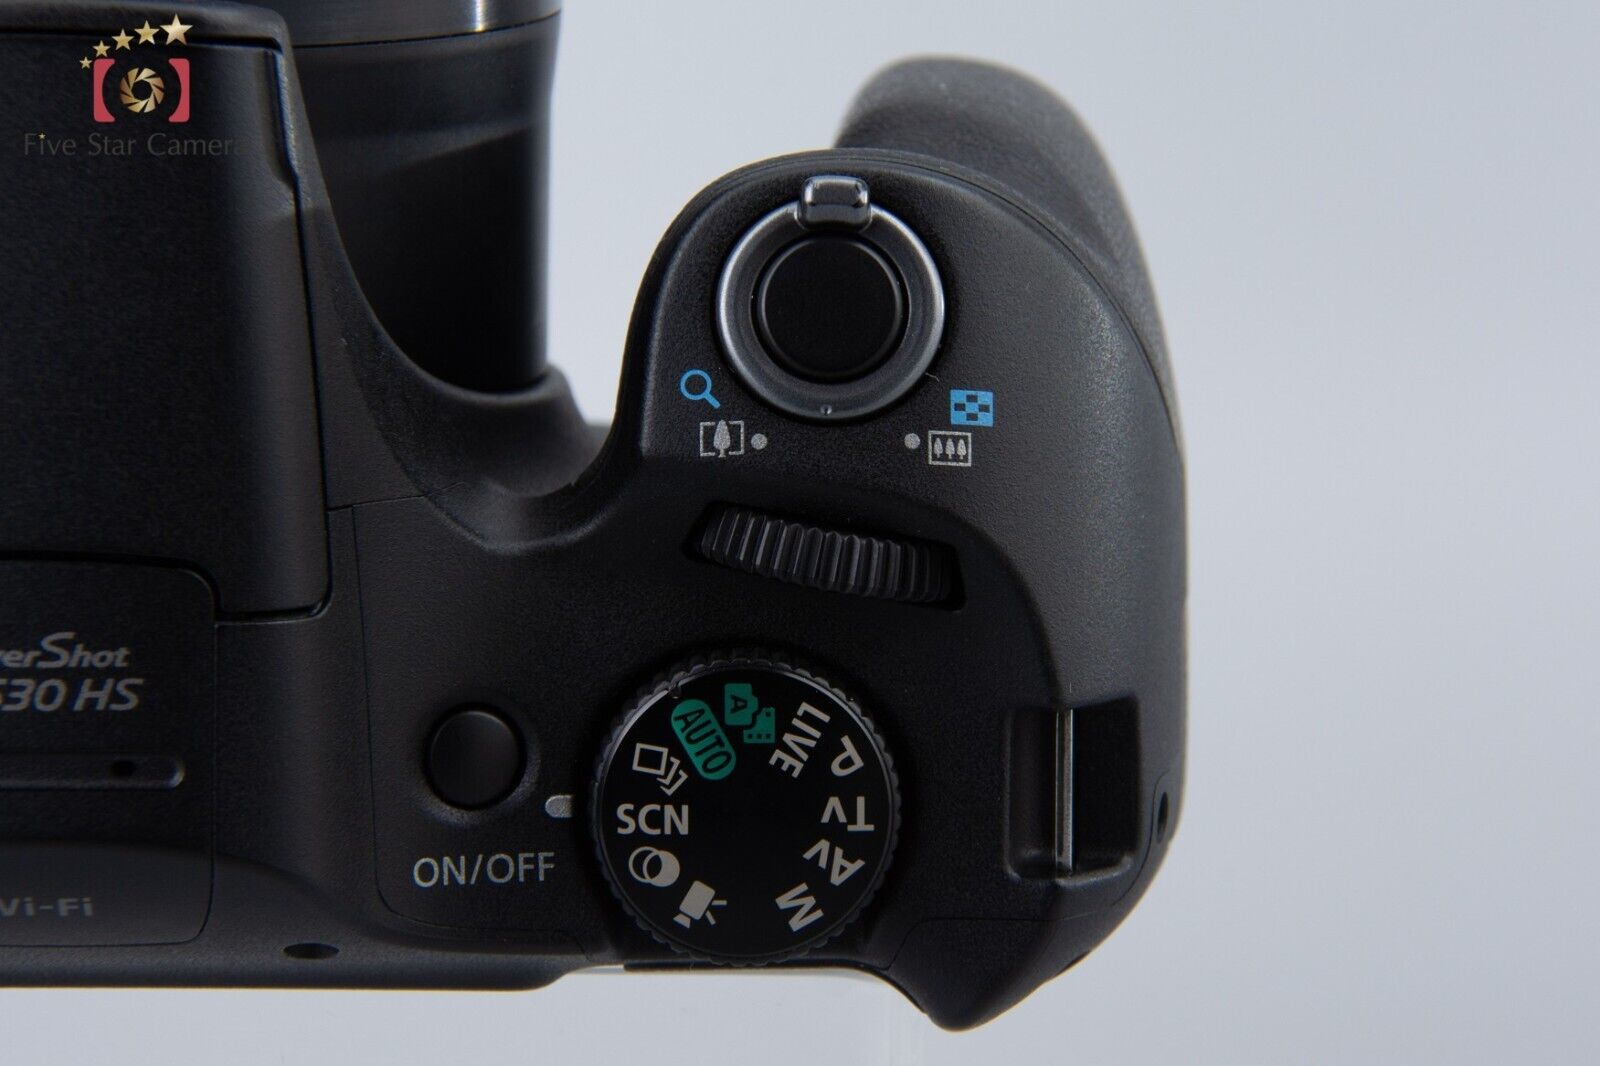 Canon PowerShot SX530 HS Black 16.0 MP Digital Camera